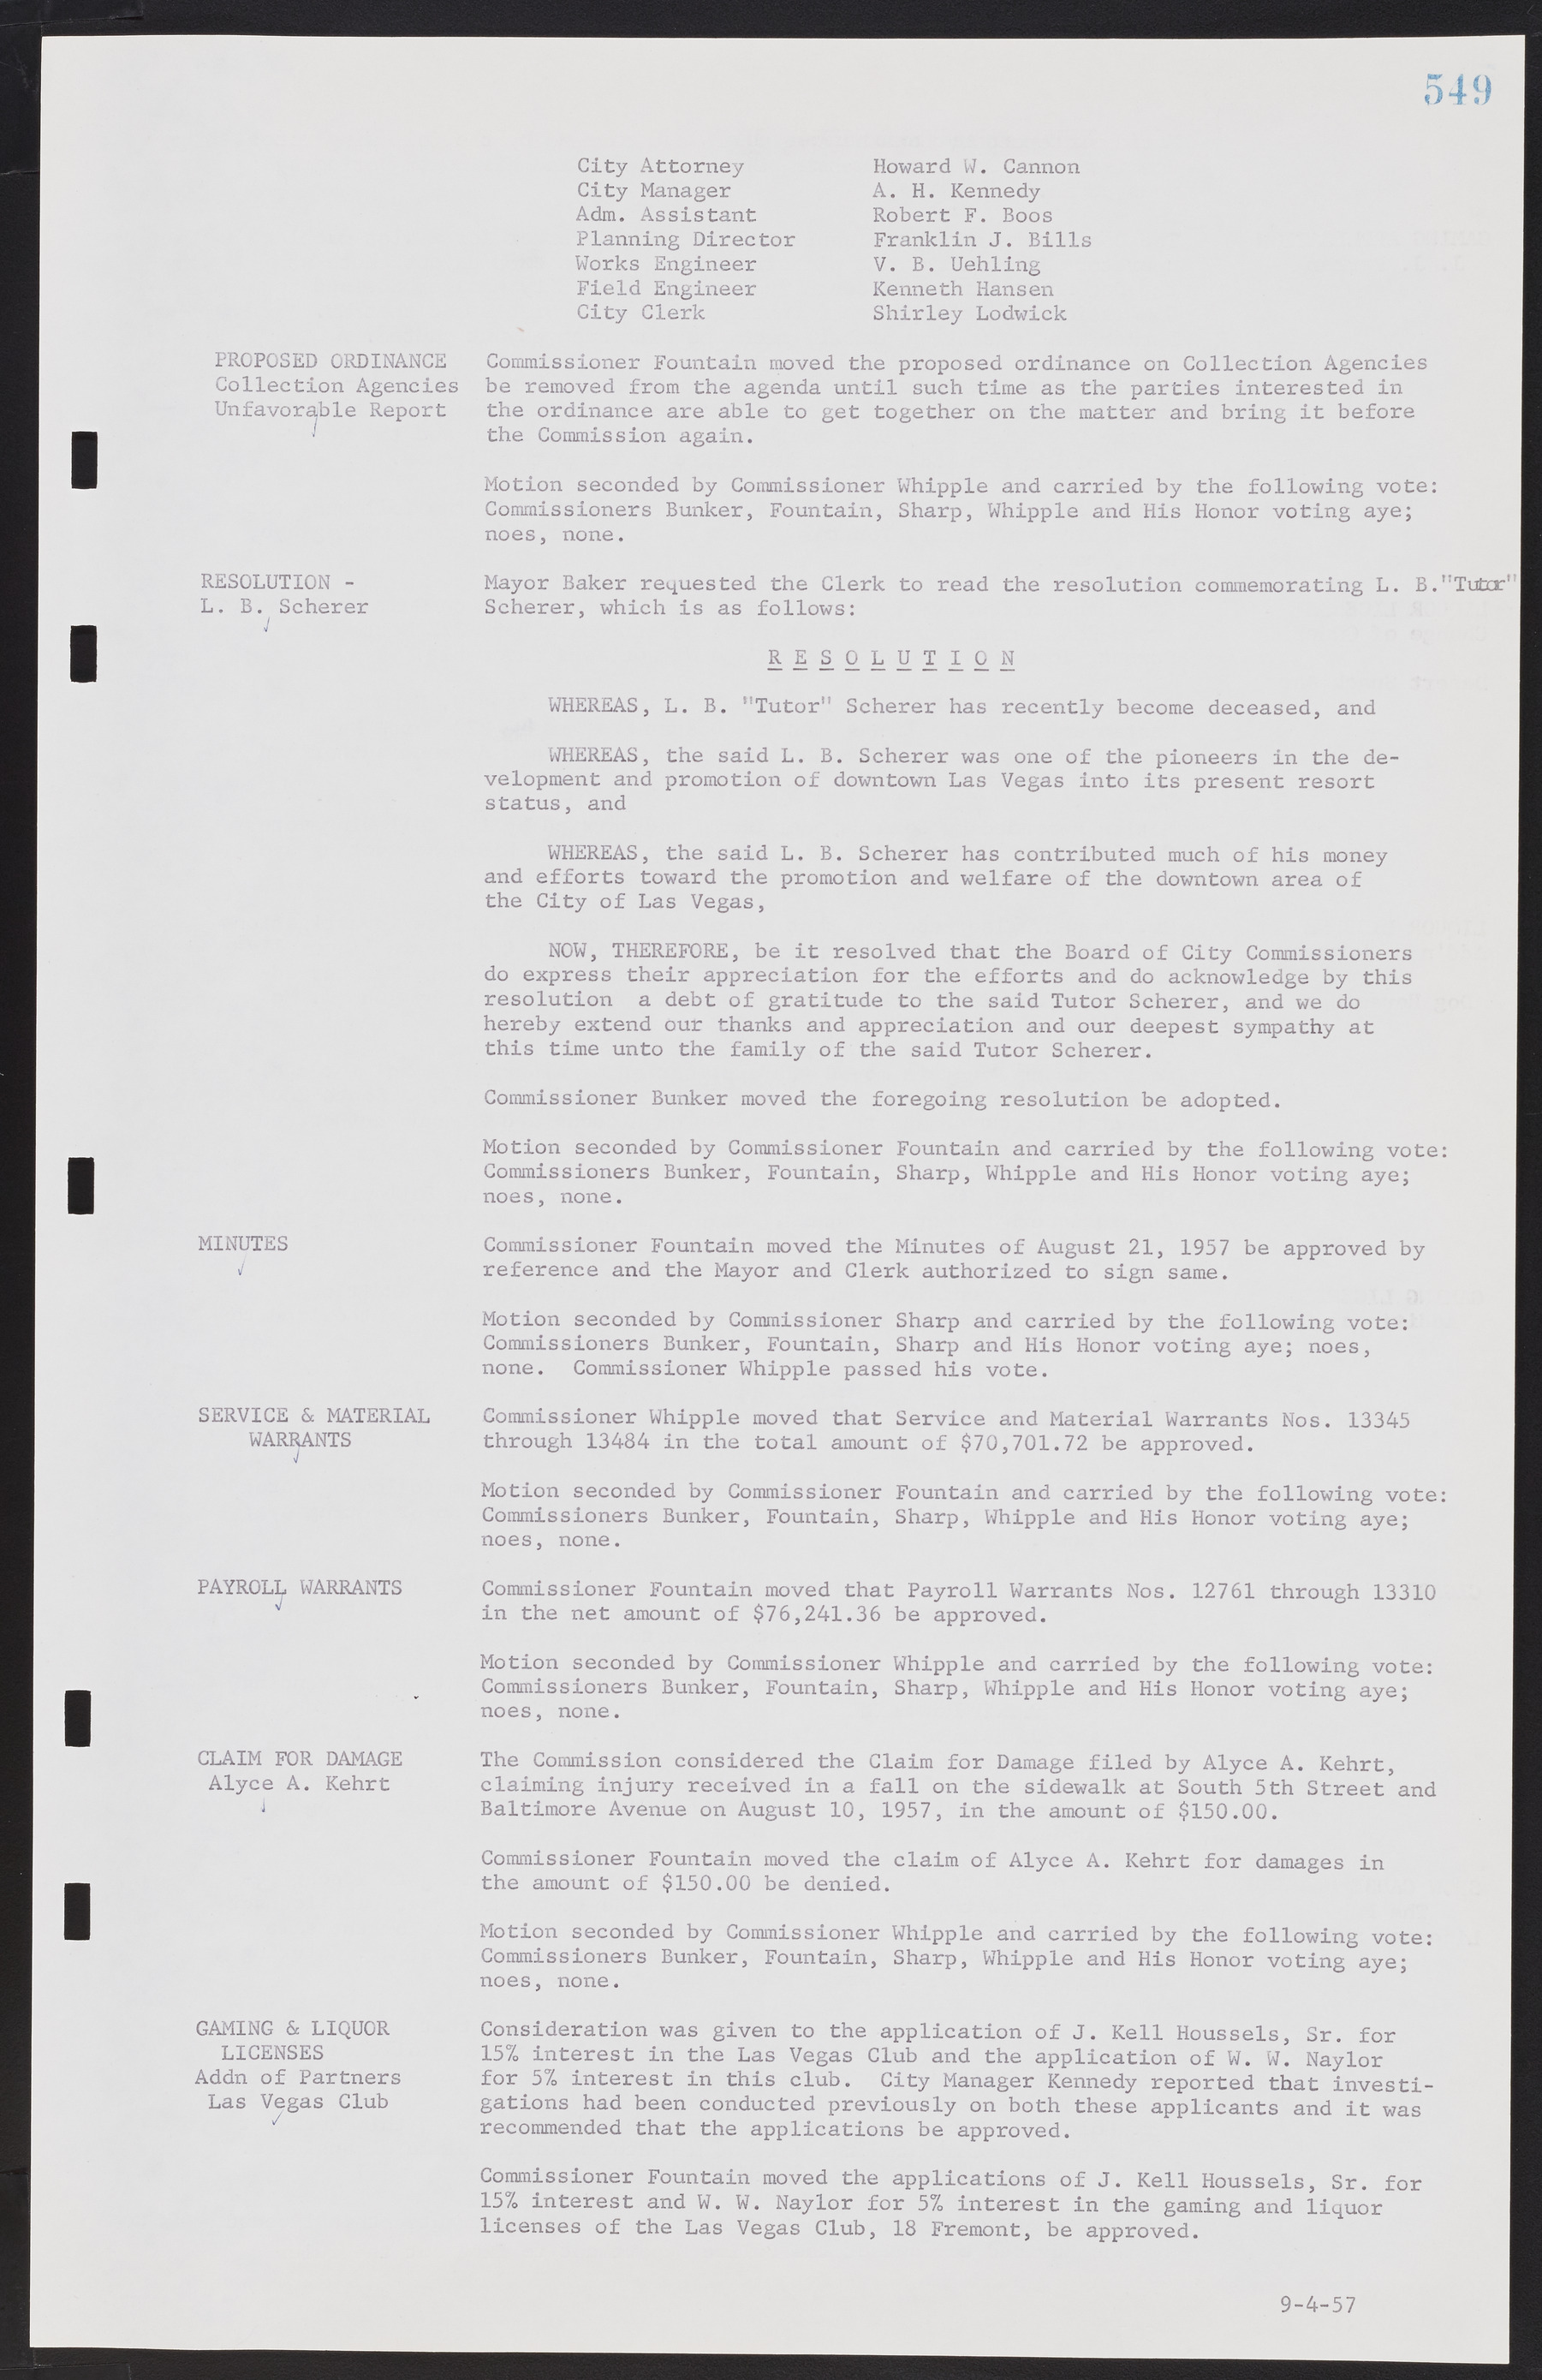 Las Vegas City Commission Minutes, September 21, 1955 to November 20, 1957, lvc000010-569